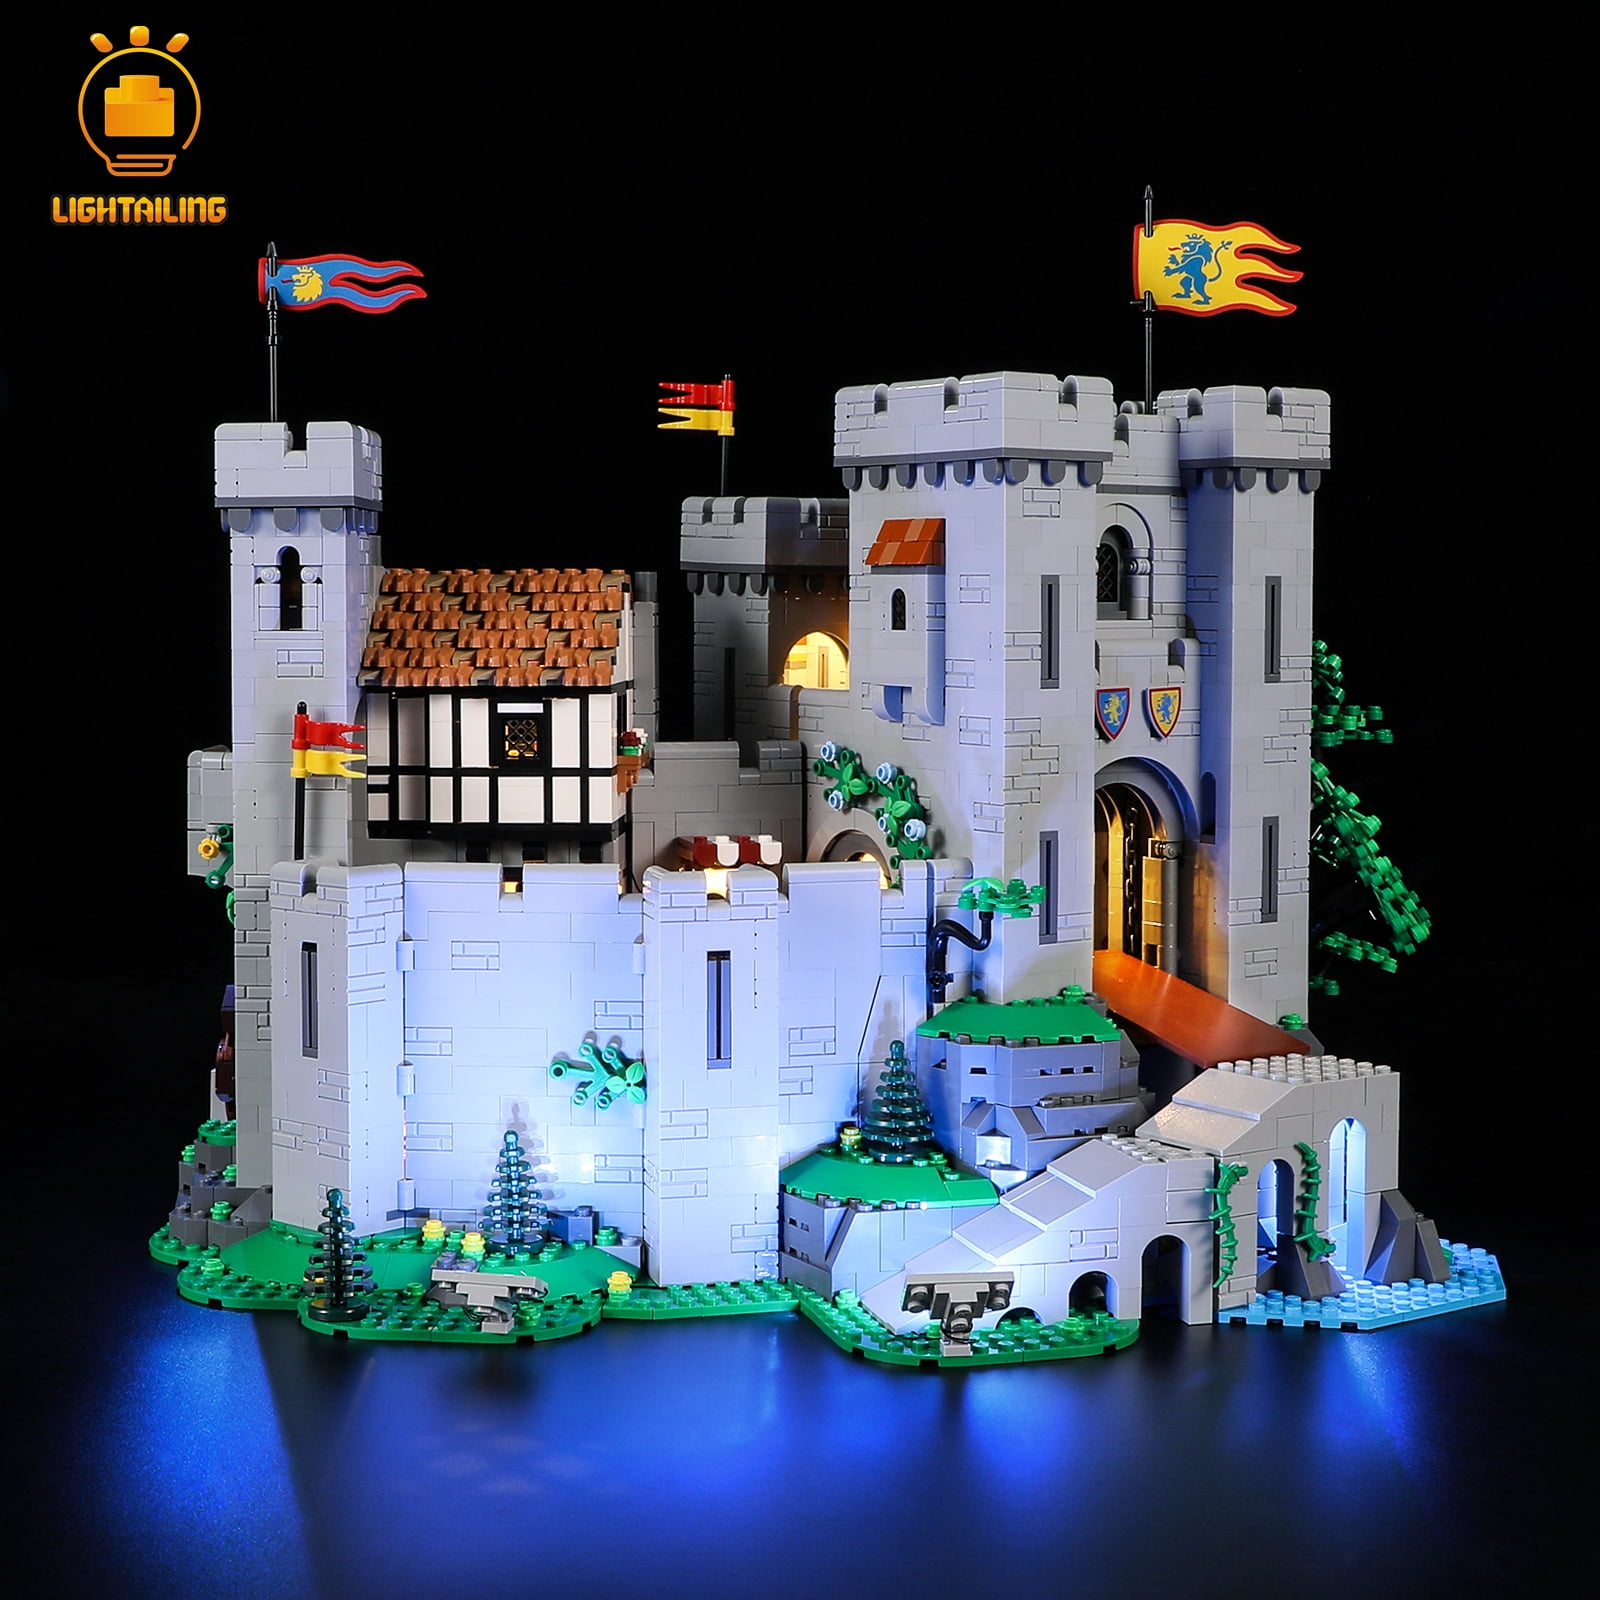  FUNWHOLE Lighting Building Bricks Set - Castle on The